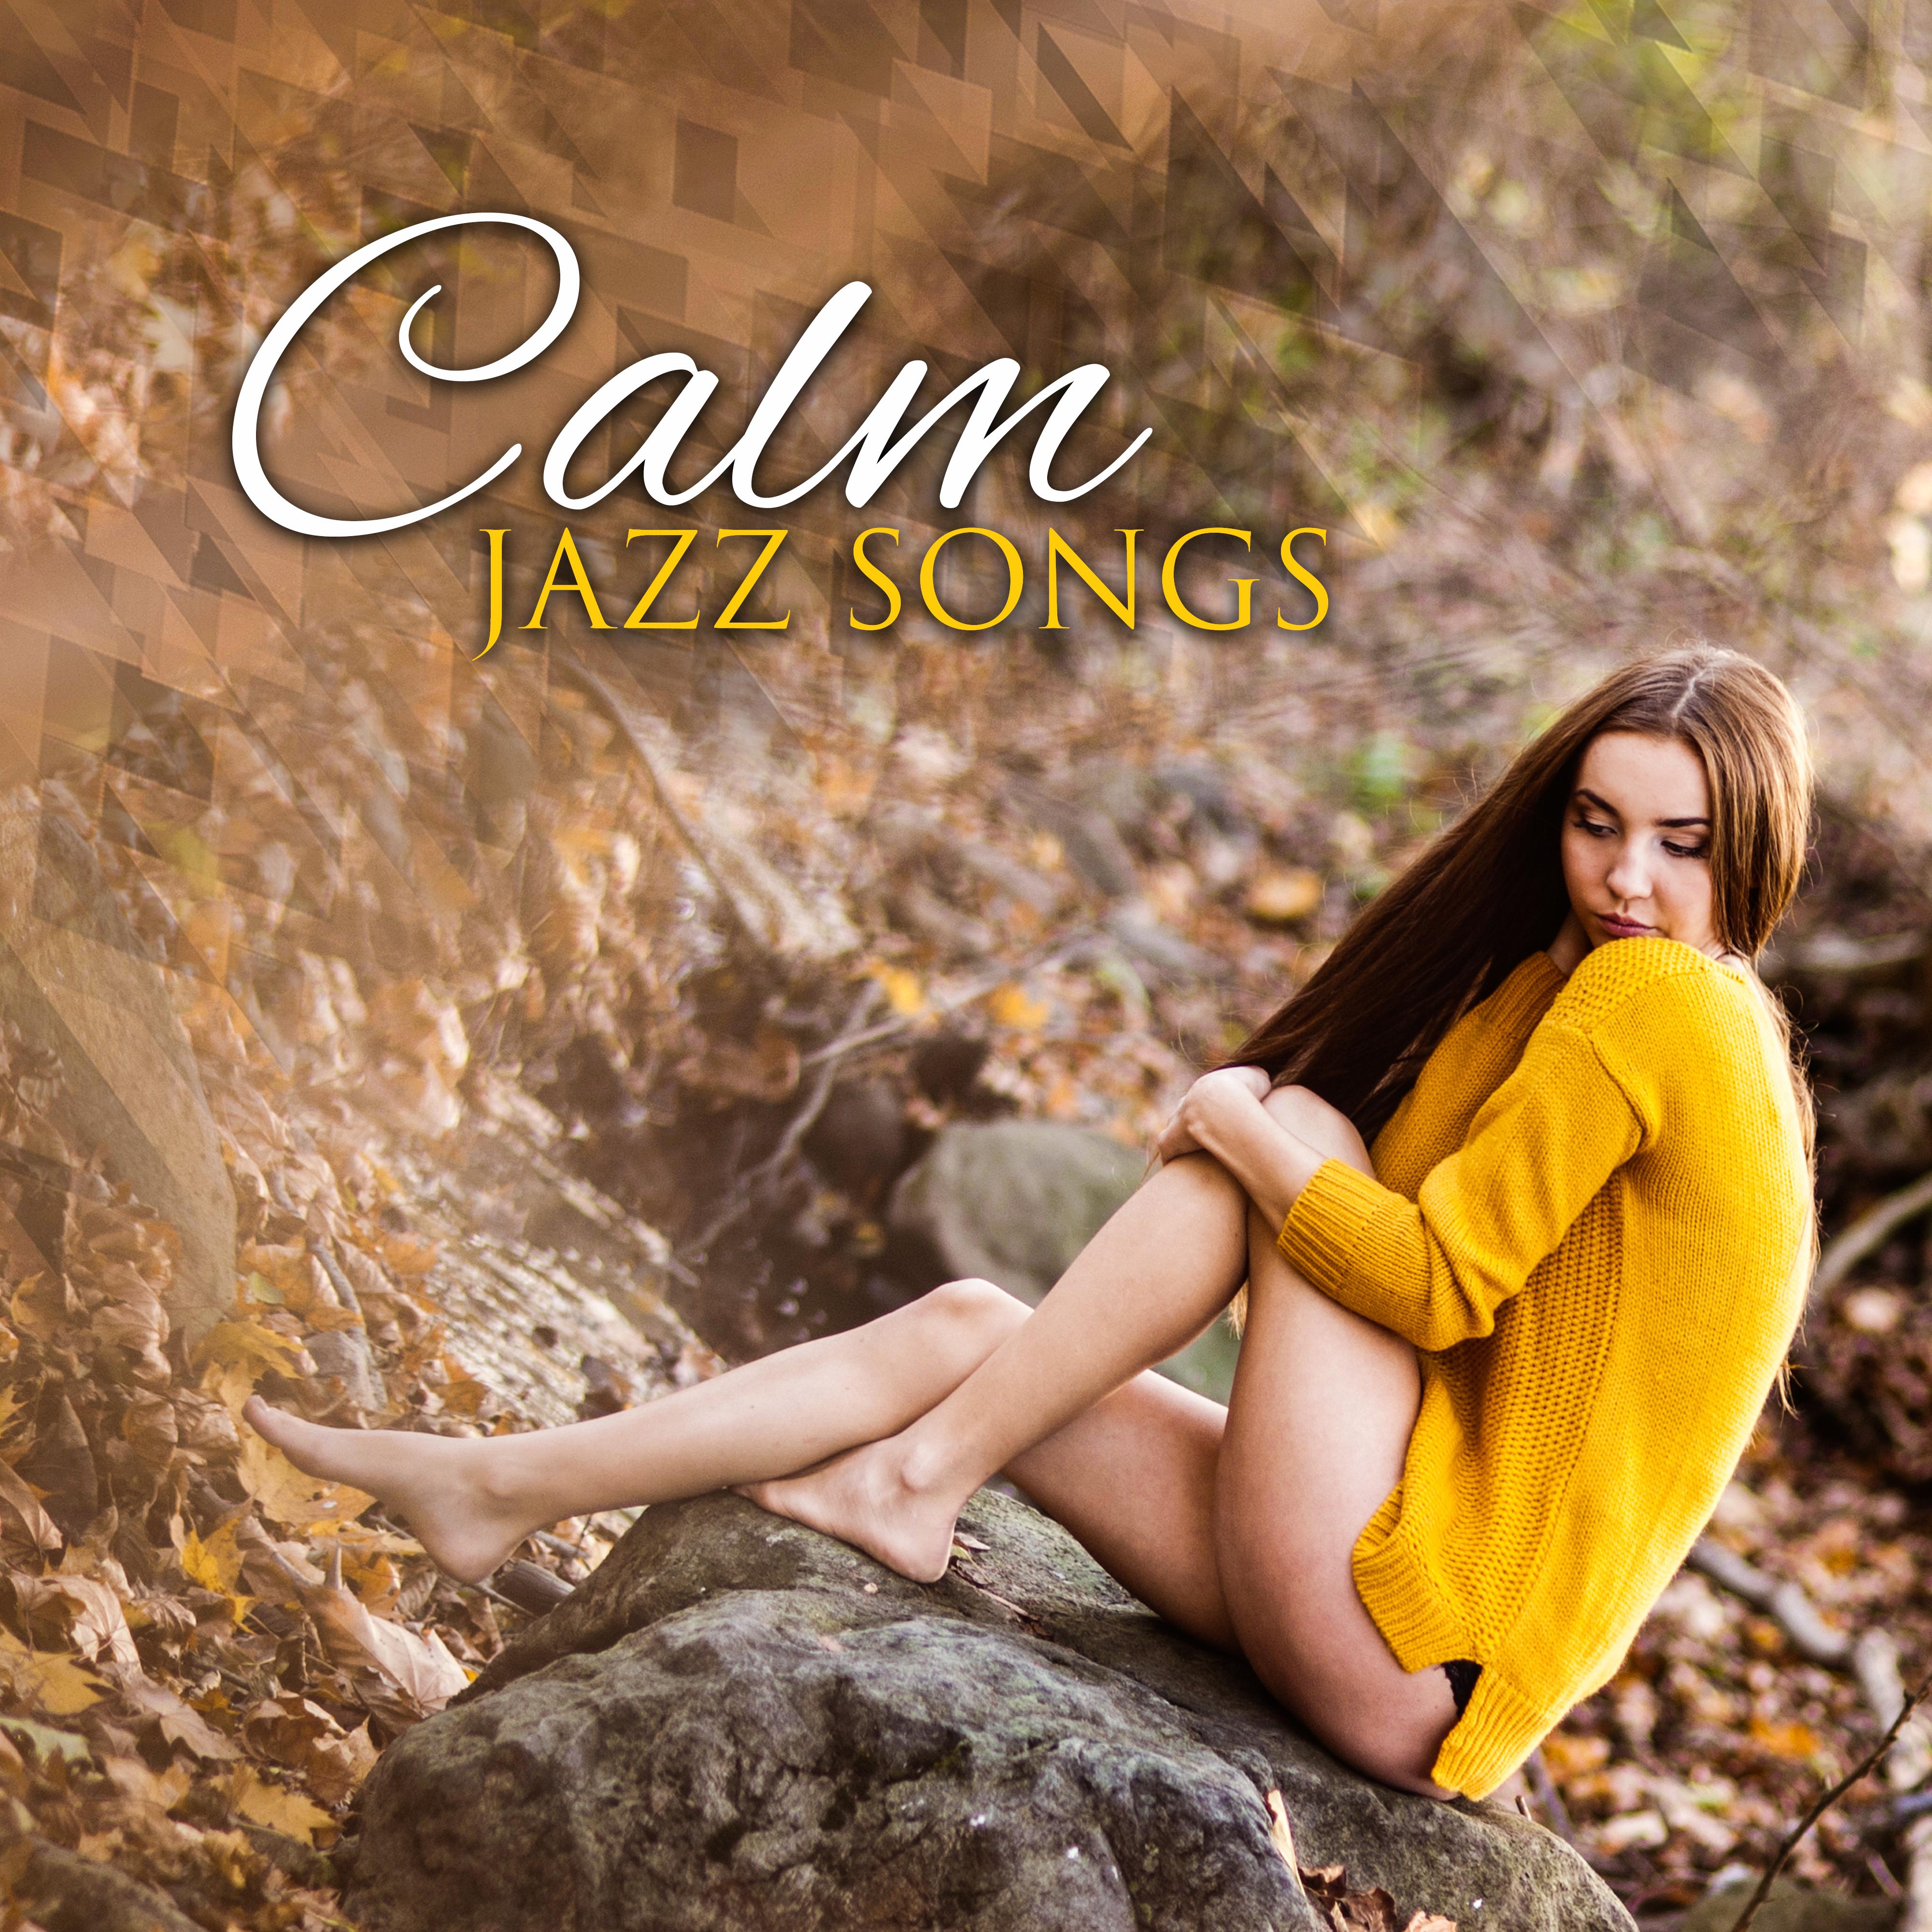 Calm Jazz Songs – Relaxing Jazz, Music for Sleep, Rest, Instrumental Album